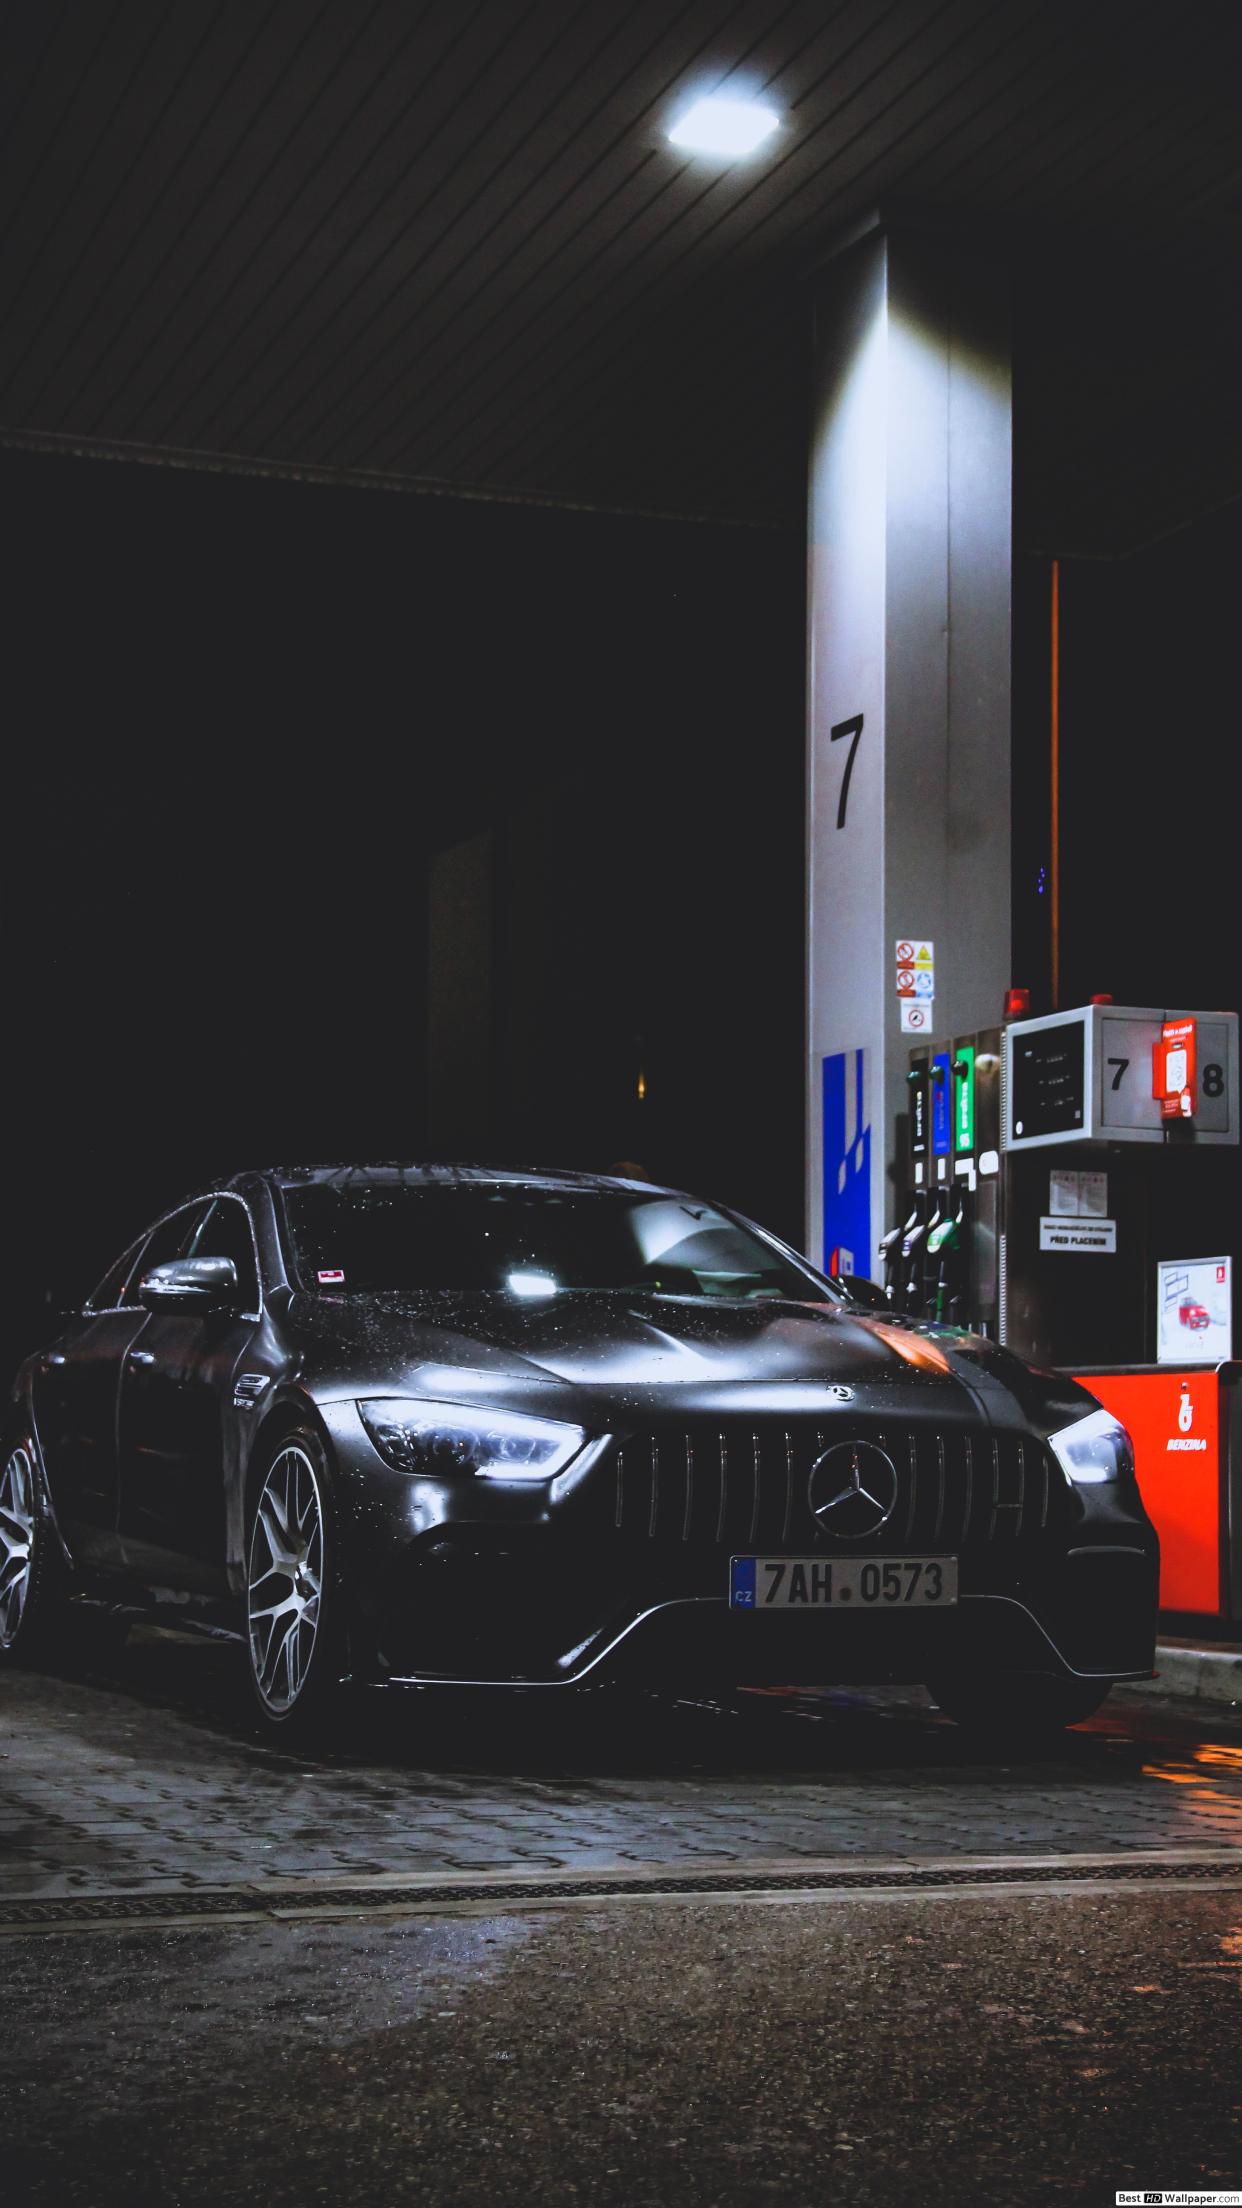 Black Mercedes Benz Car At Gas Station At Night HD Wallpaper Download